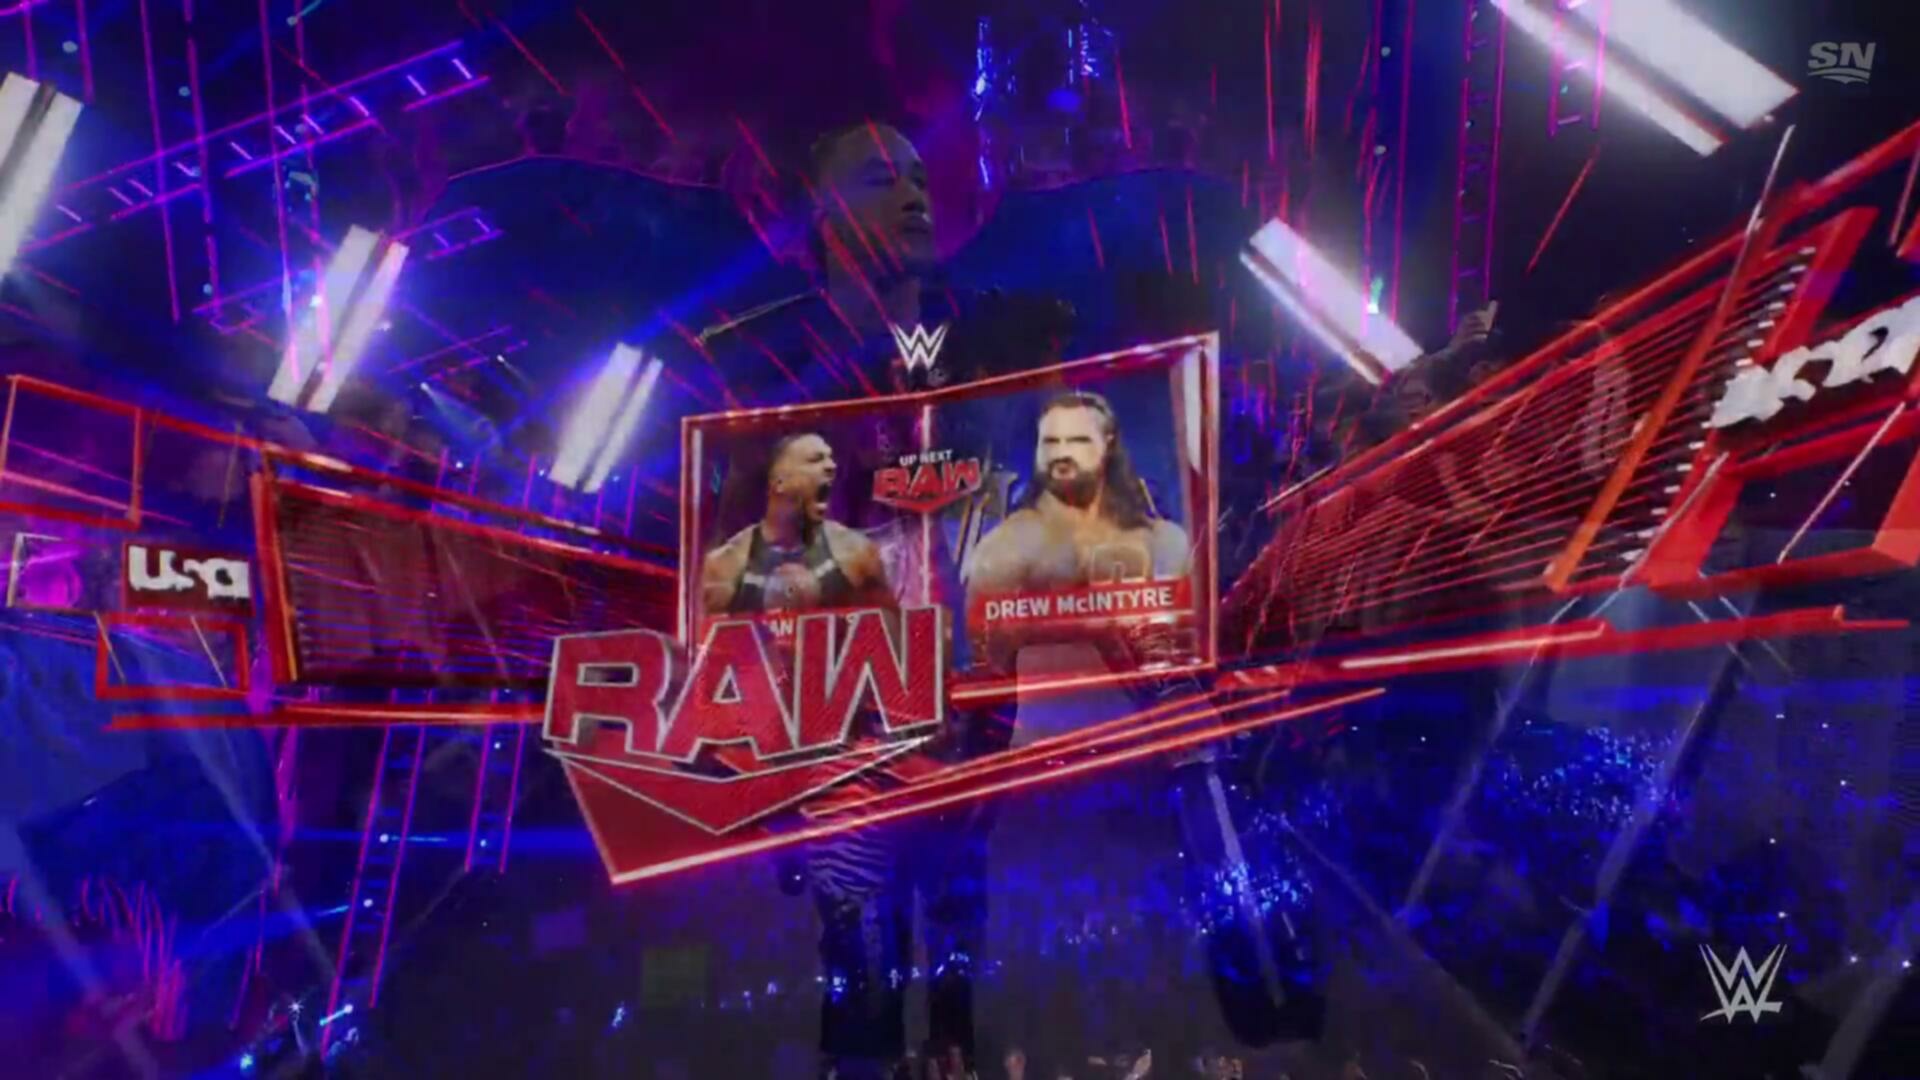 WWE RAW 2024 01 22 1080p HDTV h264 DOORS TGx